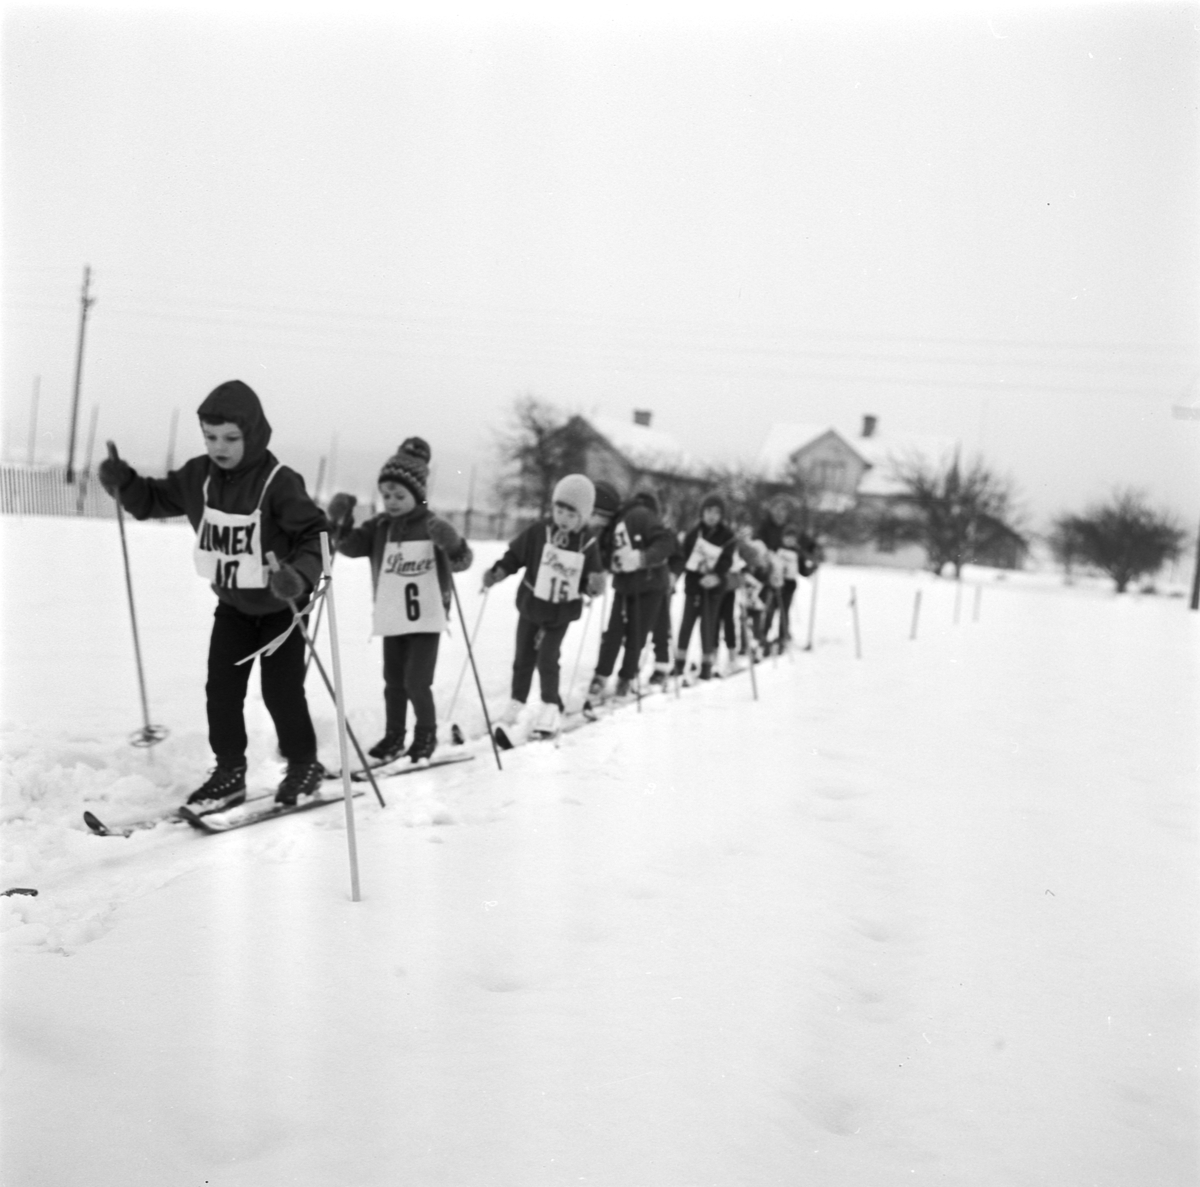 Skidskolestart i Tierp, Uppland 18 januari 1969